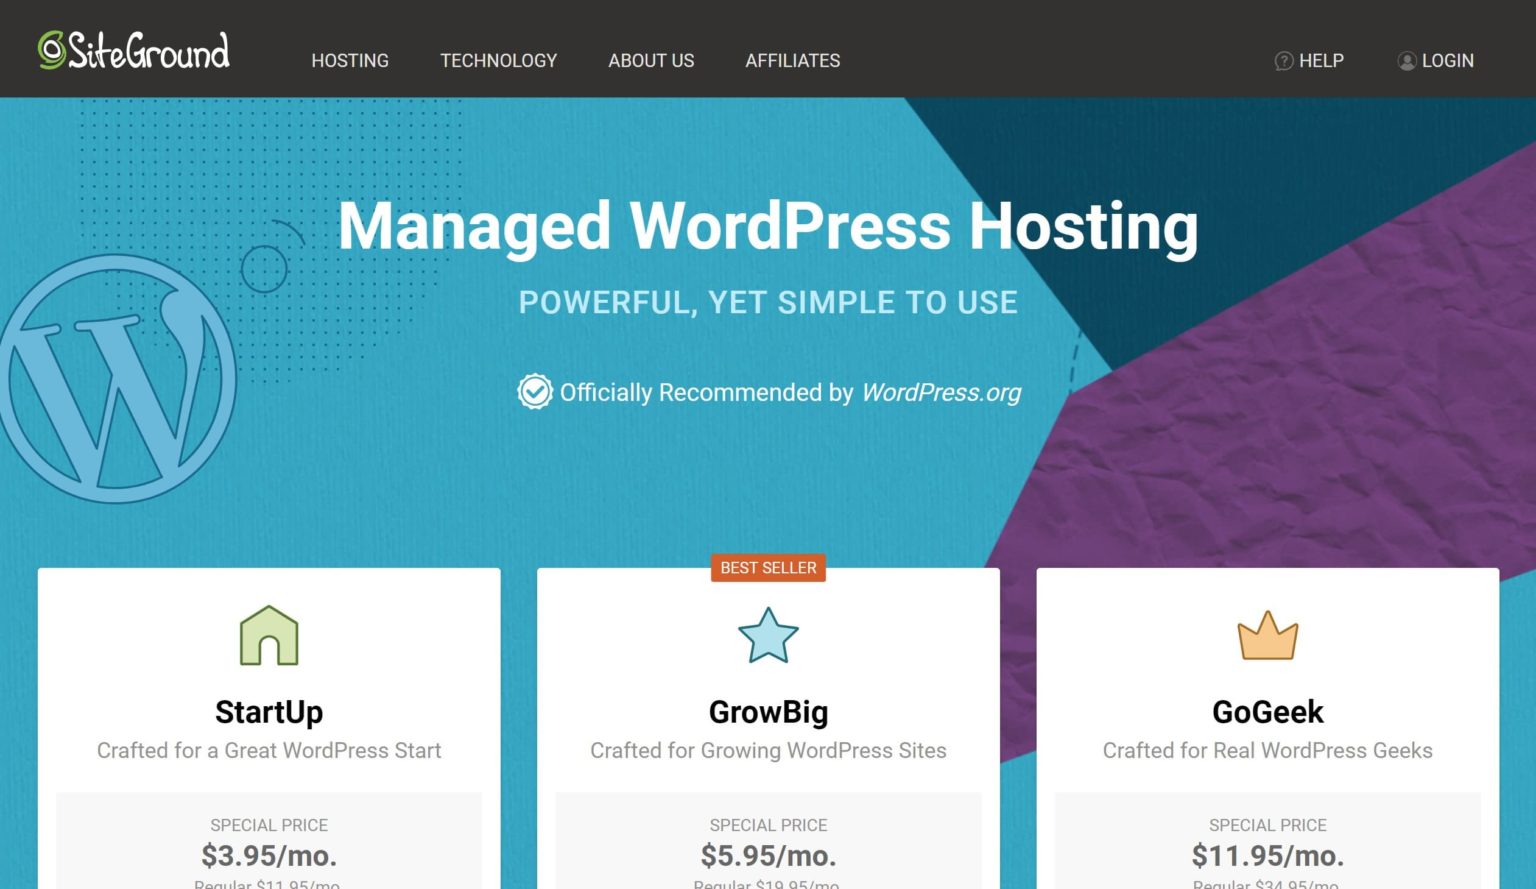 siteground is the fastest WordPress hosting provider